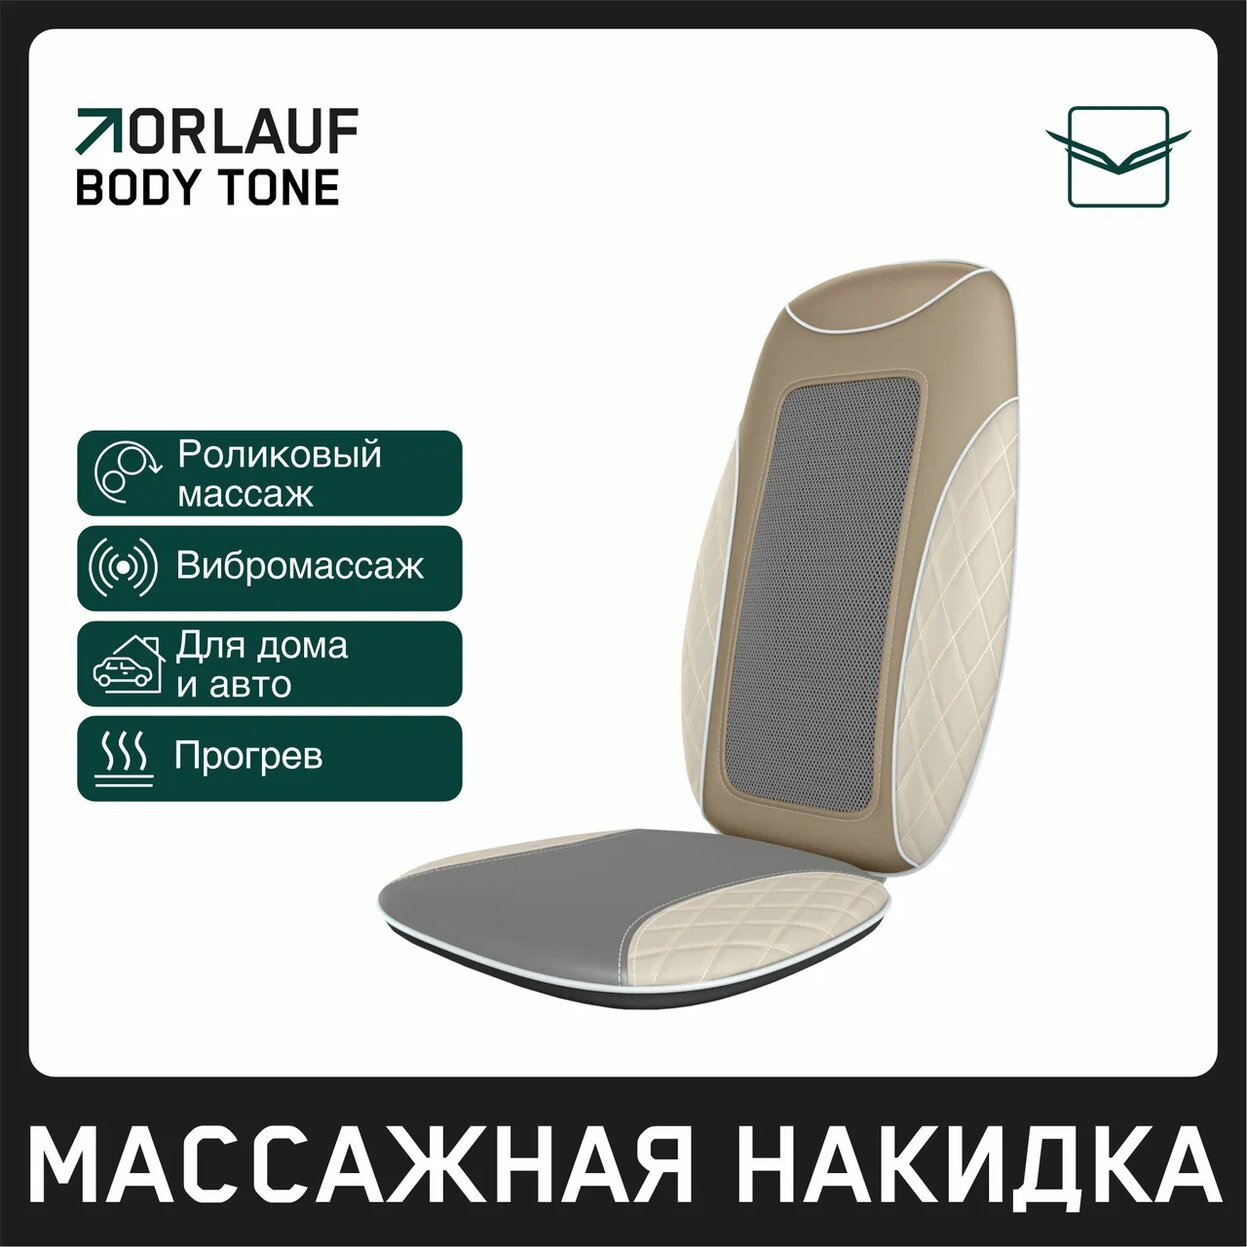 Body Tone в Москве по цене 15400 ₽ в категории каталог Orlauf